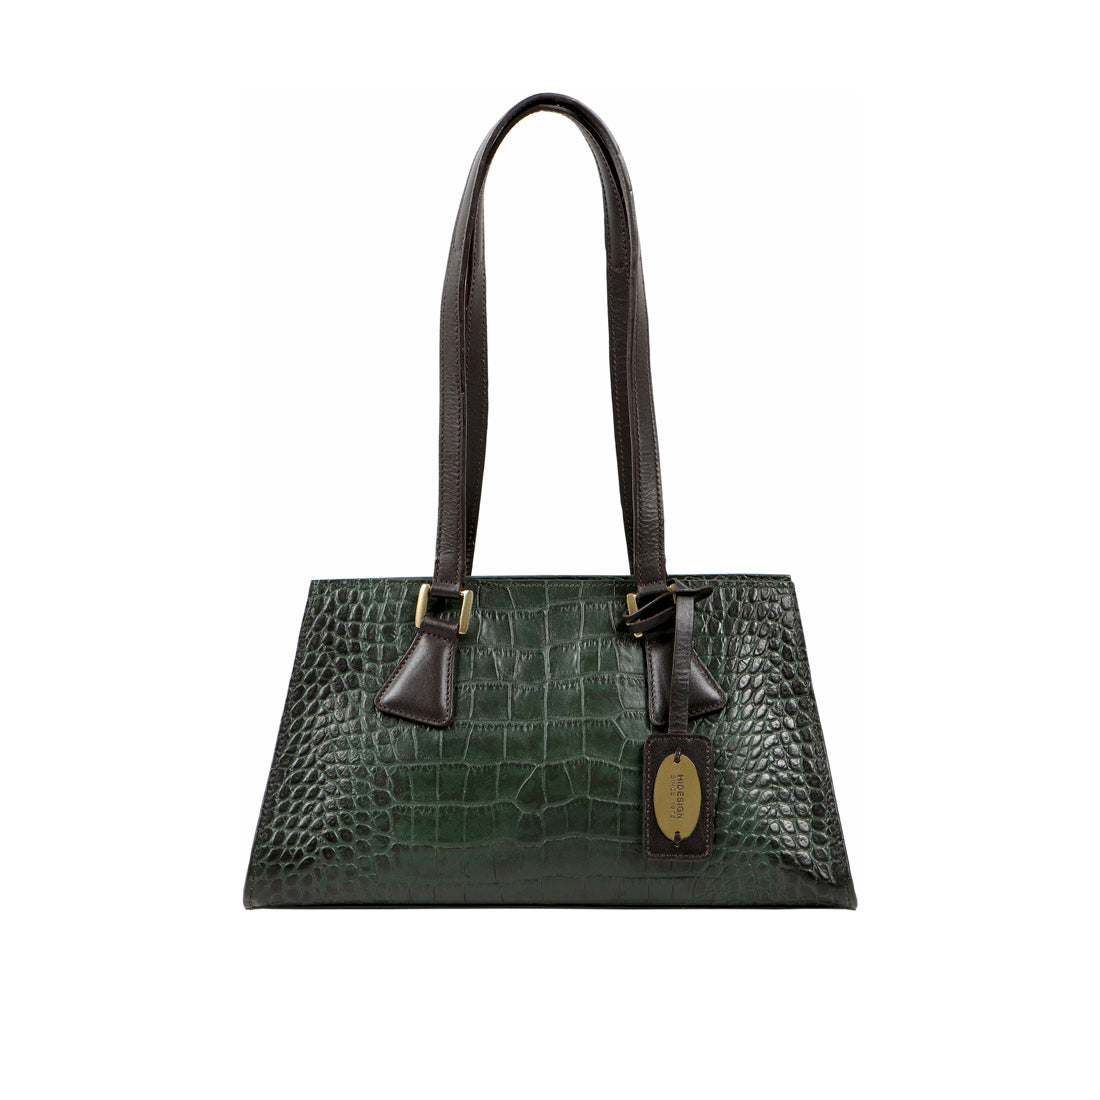 Buy Green Spruce 03 Tote Bag Online - Hidesign